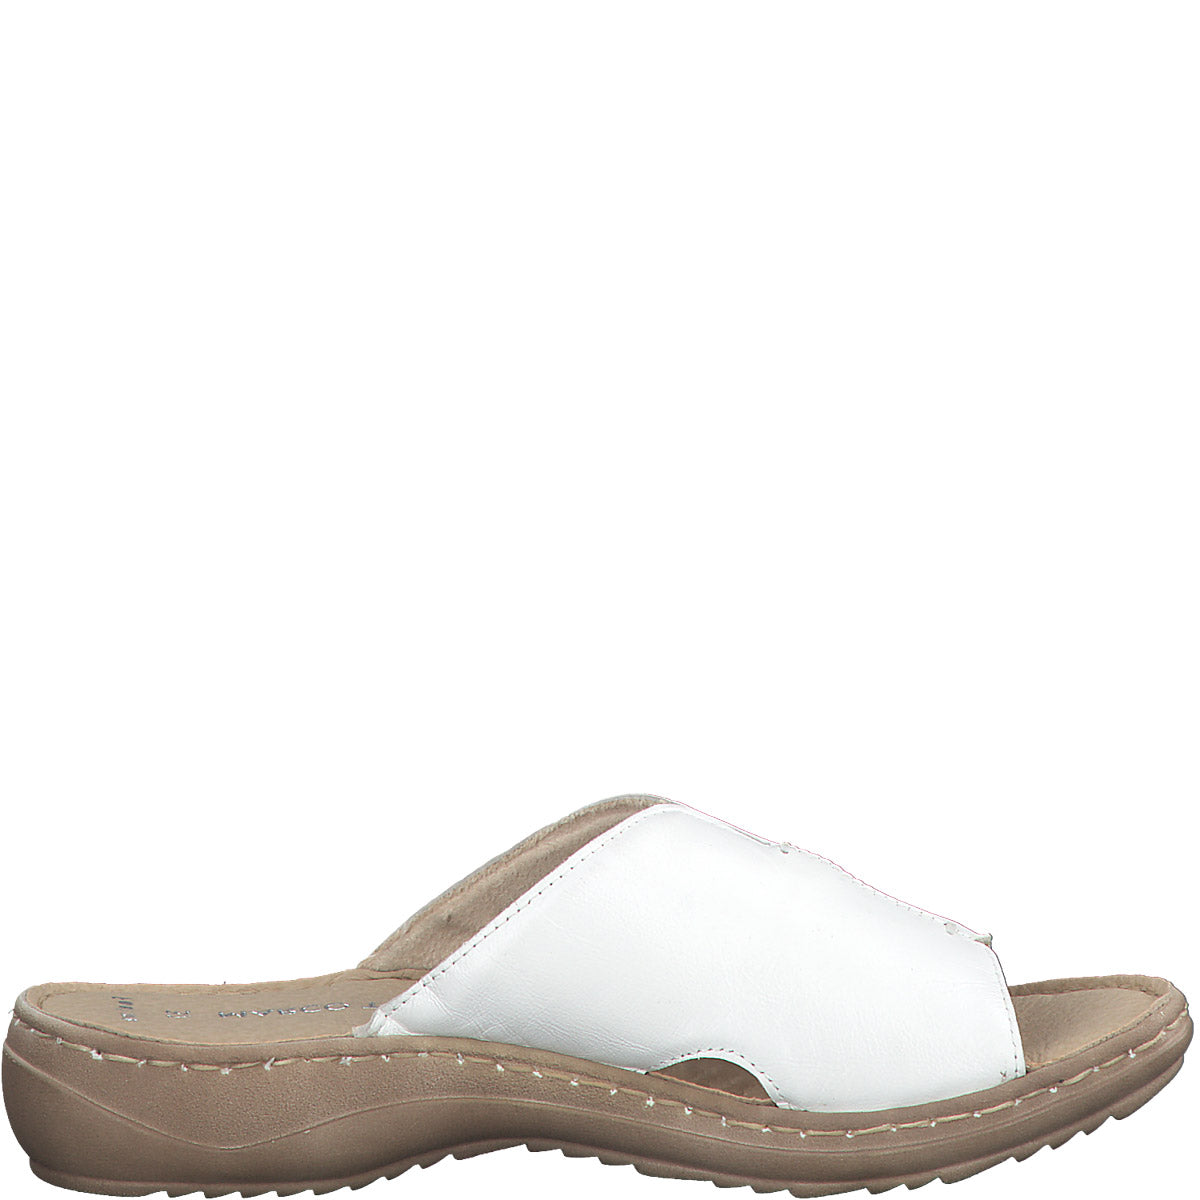 Marco Tozzi Sleek White Leather Sandal with Elasticated Slip-On Design